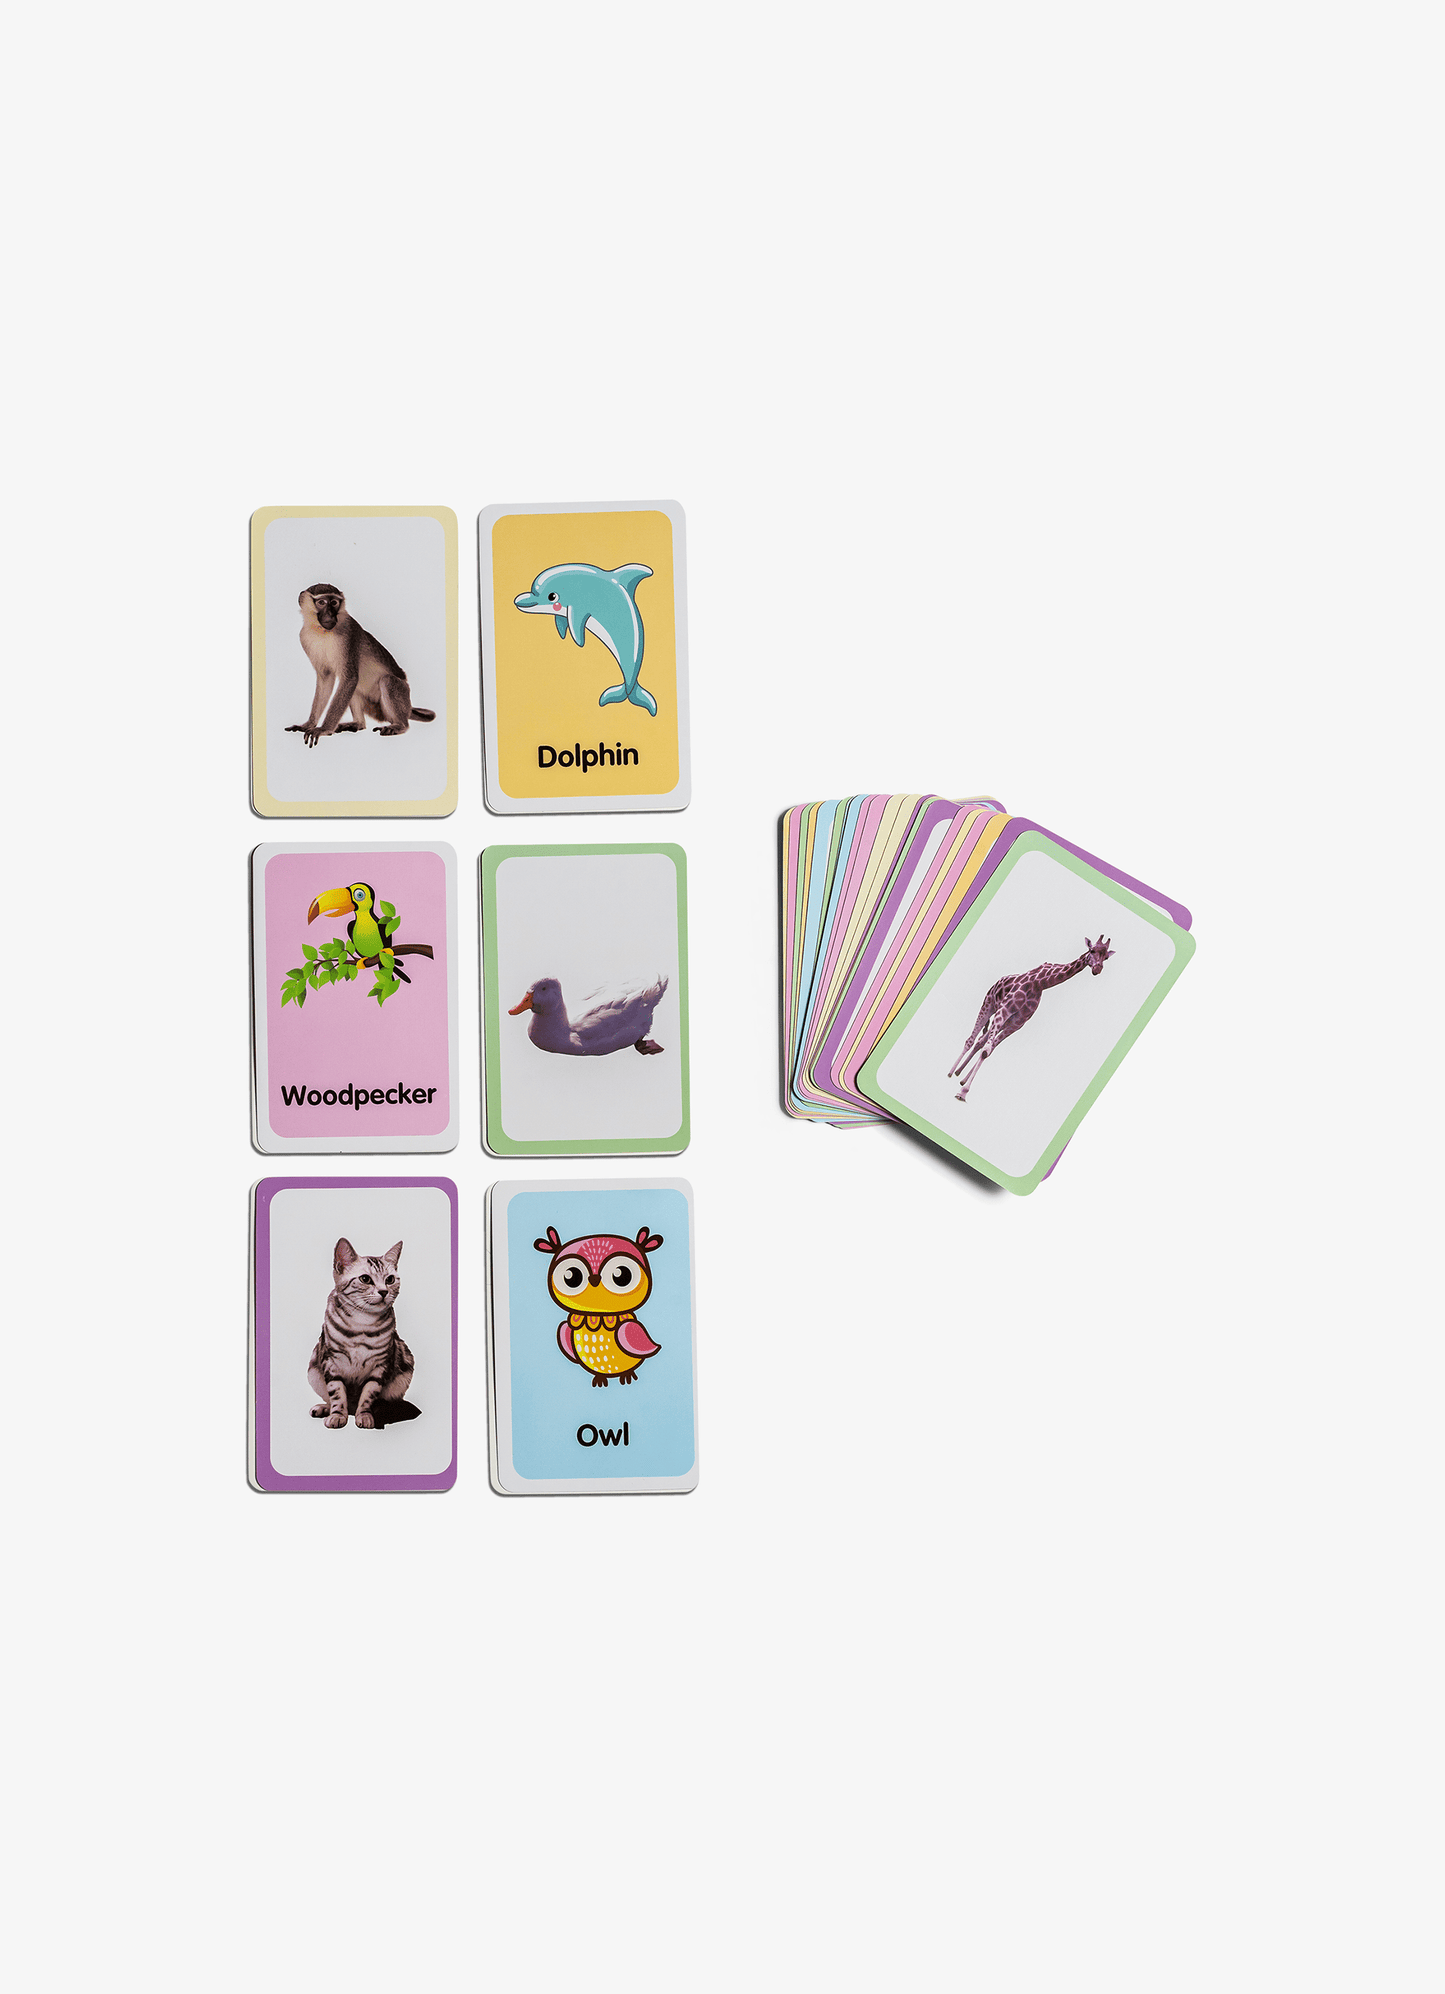 Animal Flash Cards